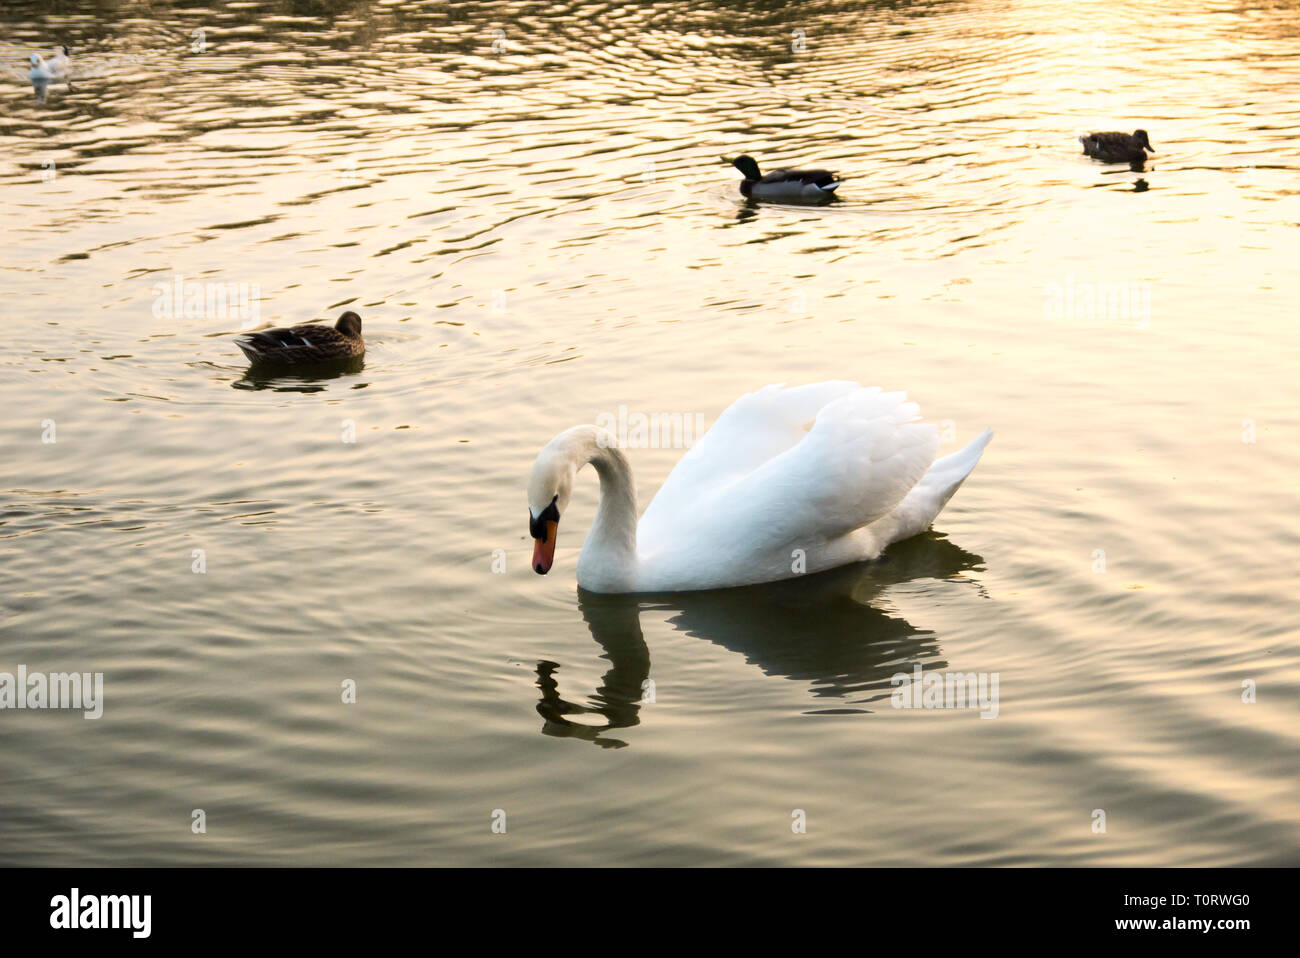 A Serene White Swan Swimming Across a Lake Stock Photo